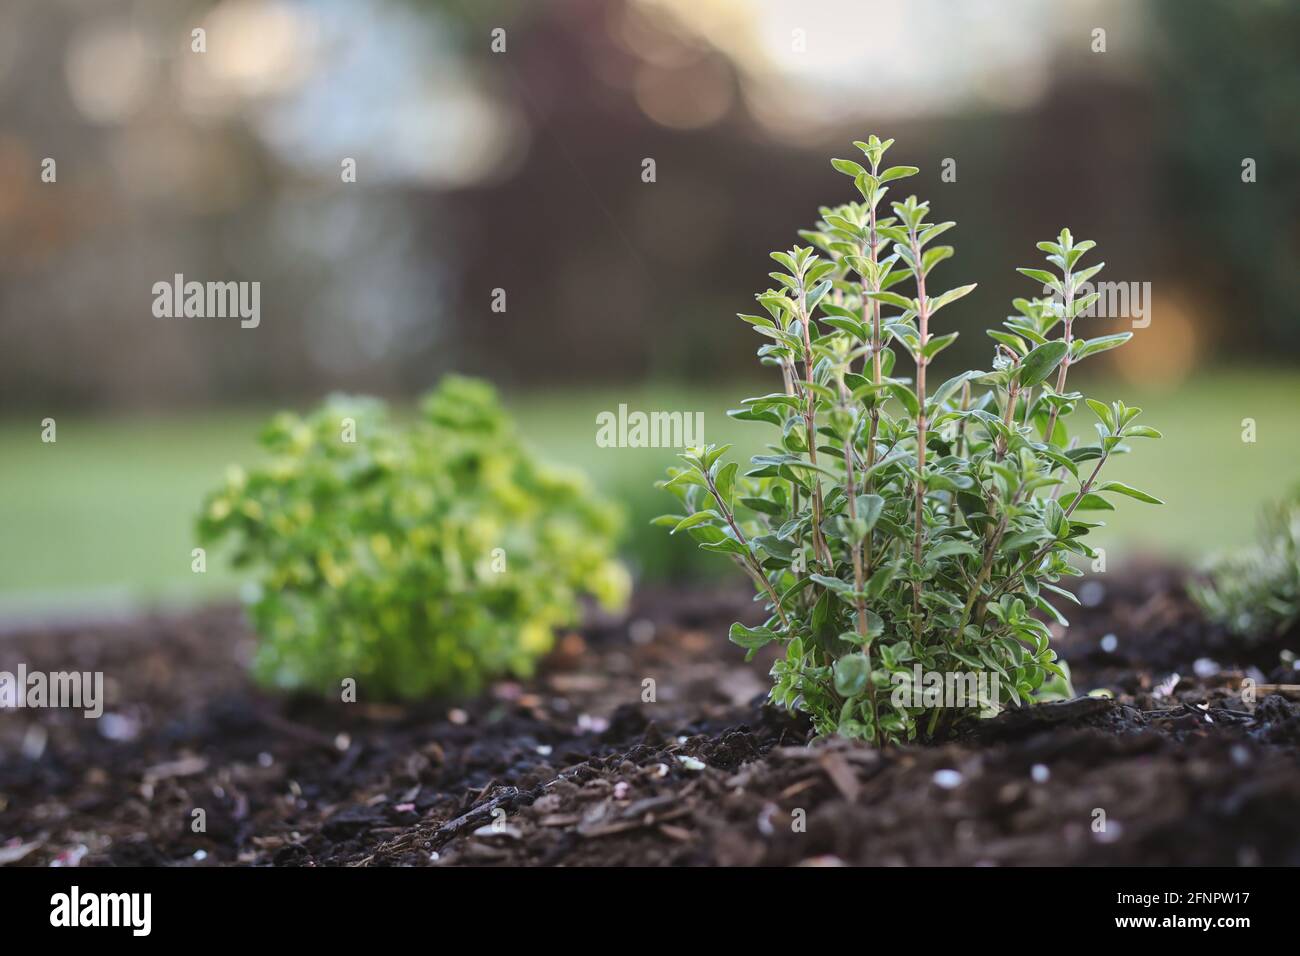 Origanum Majorana in Garden Soil with Bokeh Background. Green Marjoram Growth during Spring Season. Stock Photo